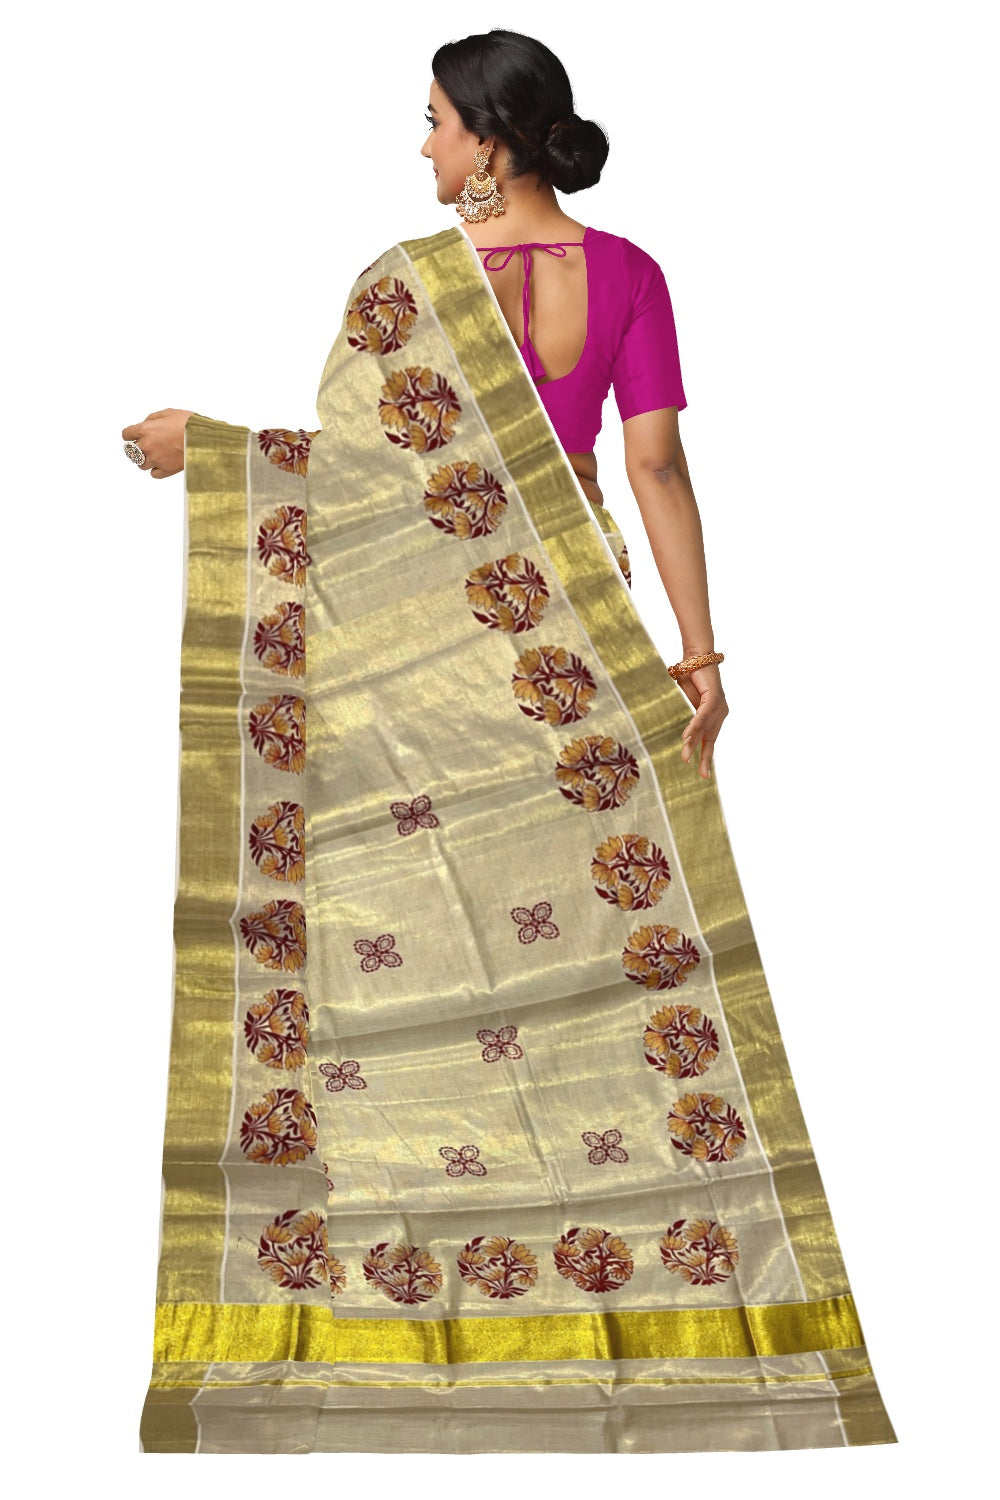 Kerala Tissue Kasavu Orange Golden Block Printed Design Saree